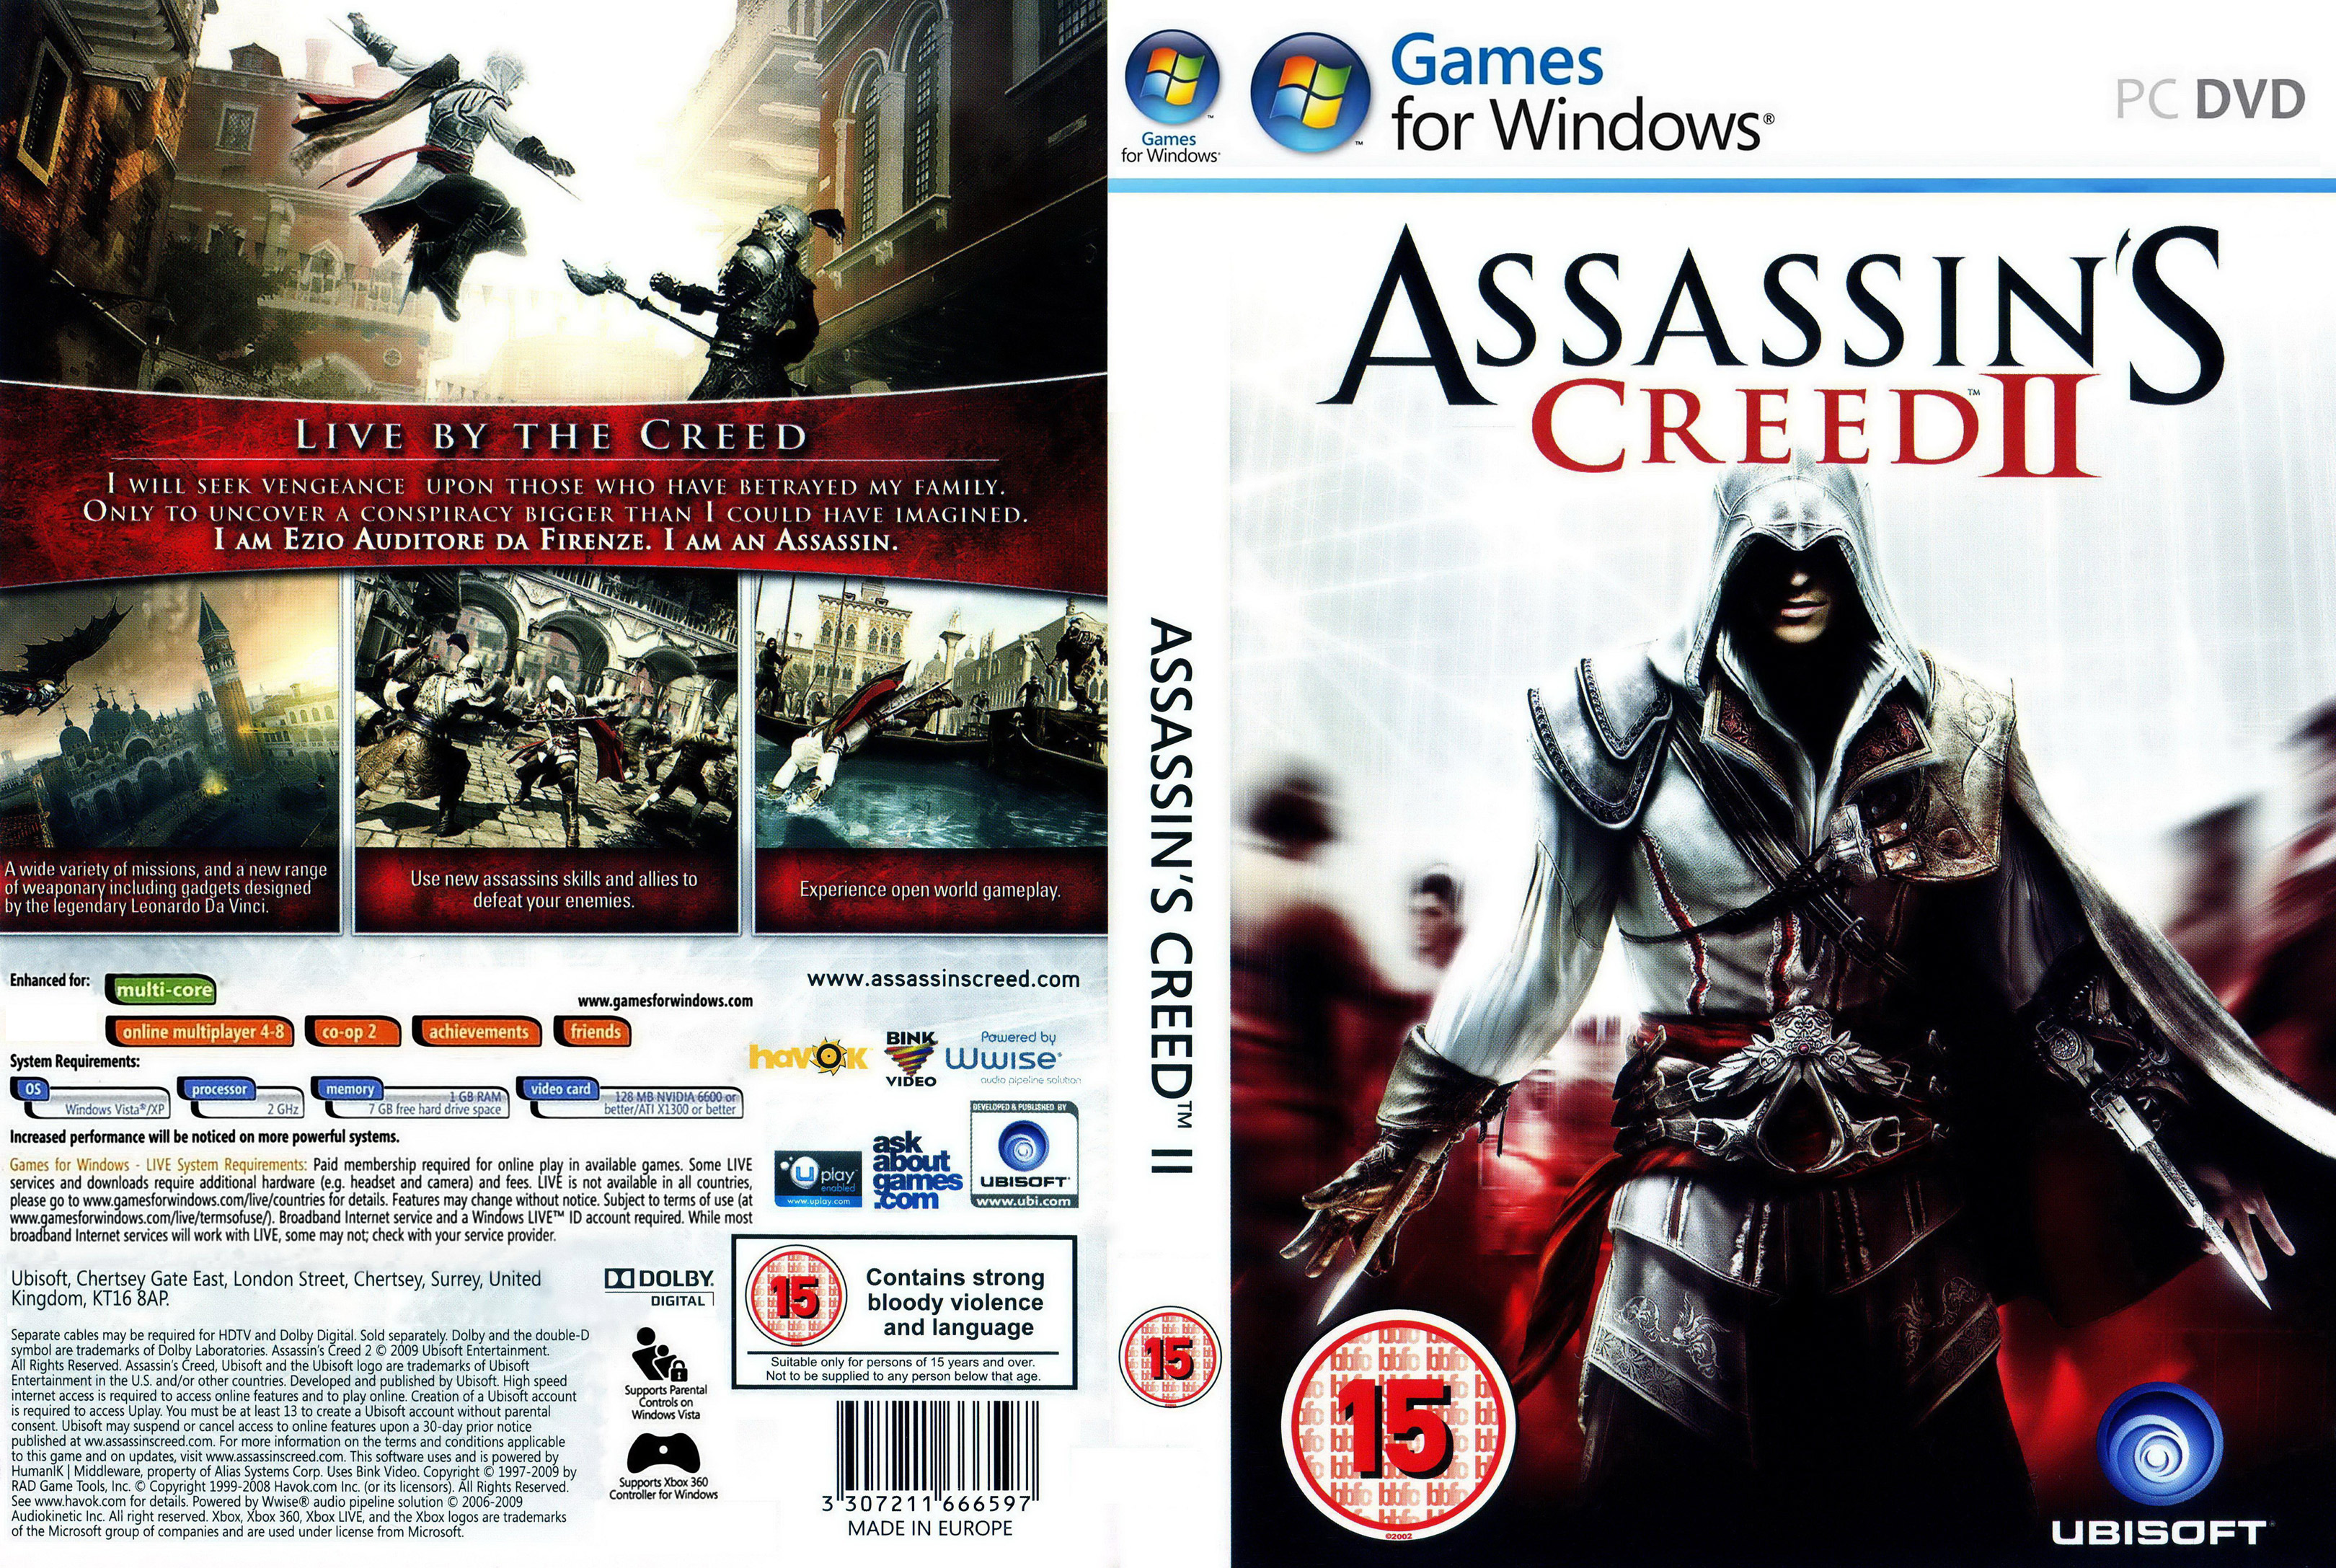 Assassin's Creed brother PC DVD. Чит коды для Assassins Creed 2 на Xbox.